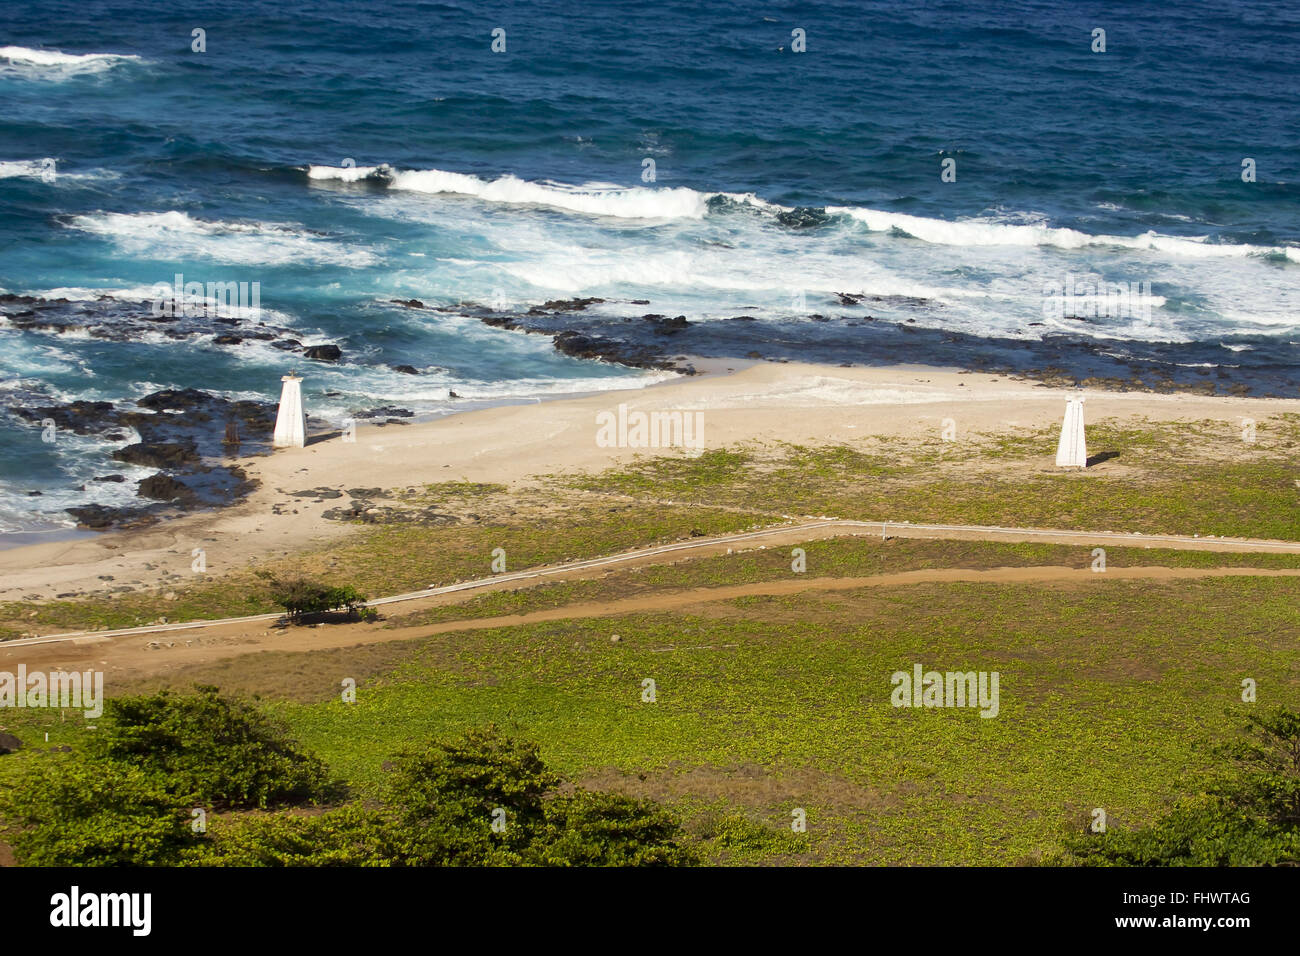 Landscape of the island of Trinidad in the Atlantic Ocean - POIT Tour Oceanografico Trindade Island Stock Photo